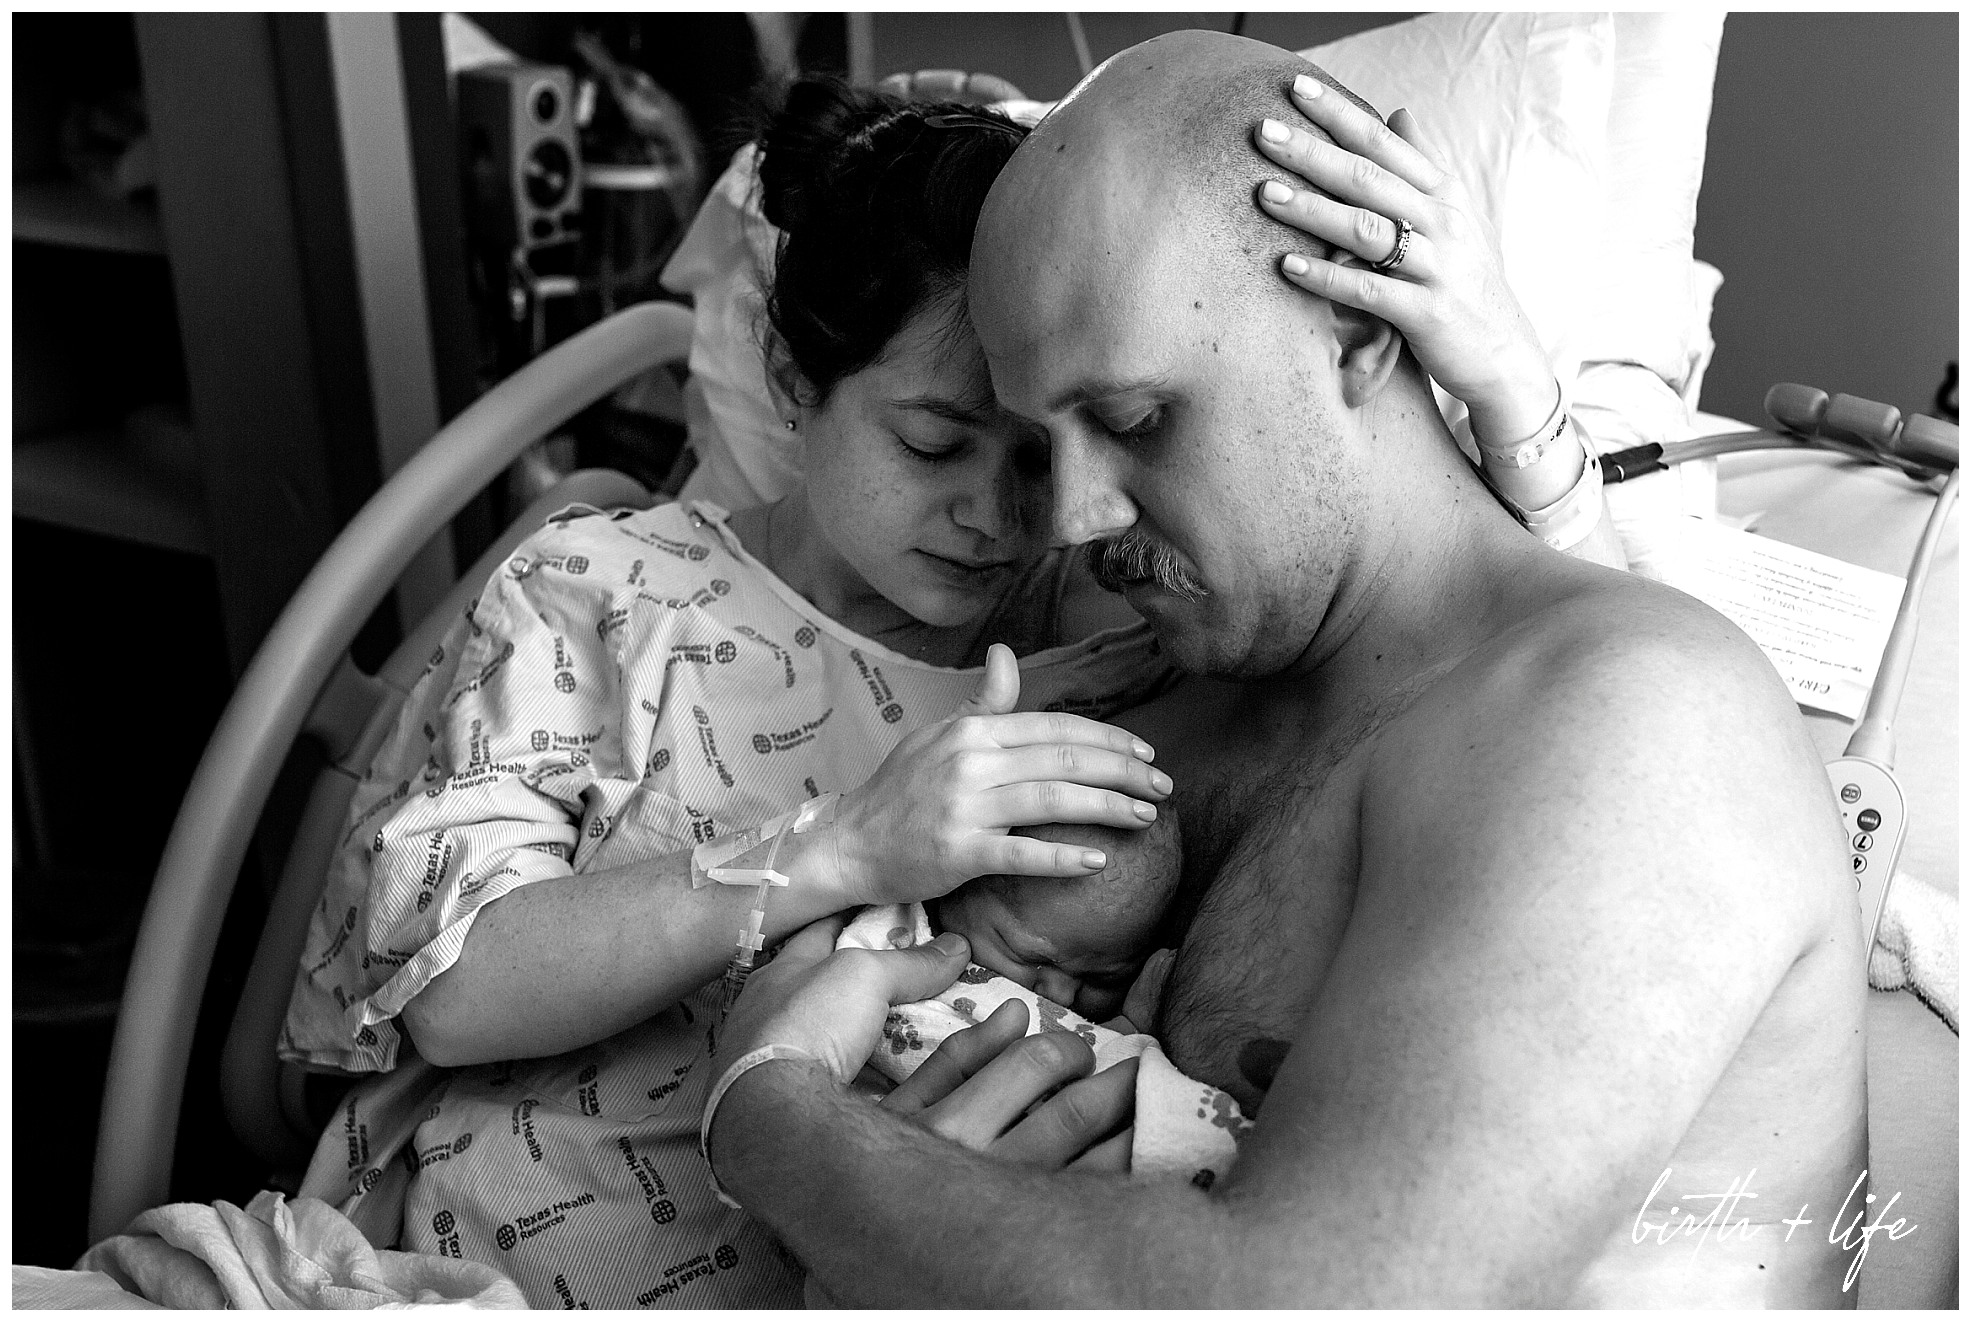 dfw-birth-and-life-photography-family-photojournalism-documentary-birth-storyacclaim-midwives-clark041.jpg